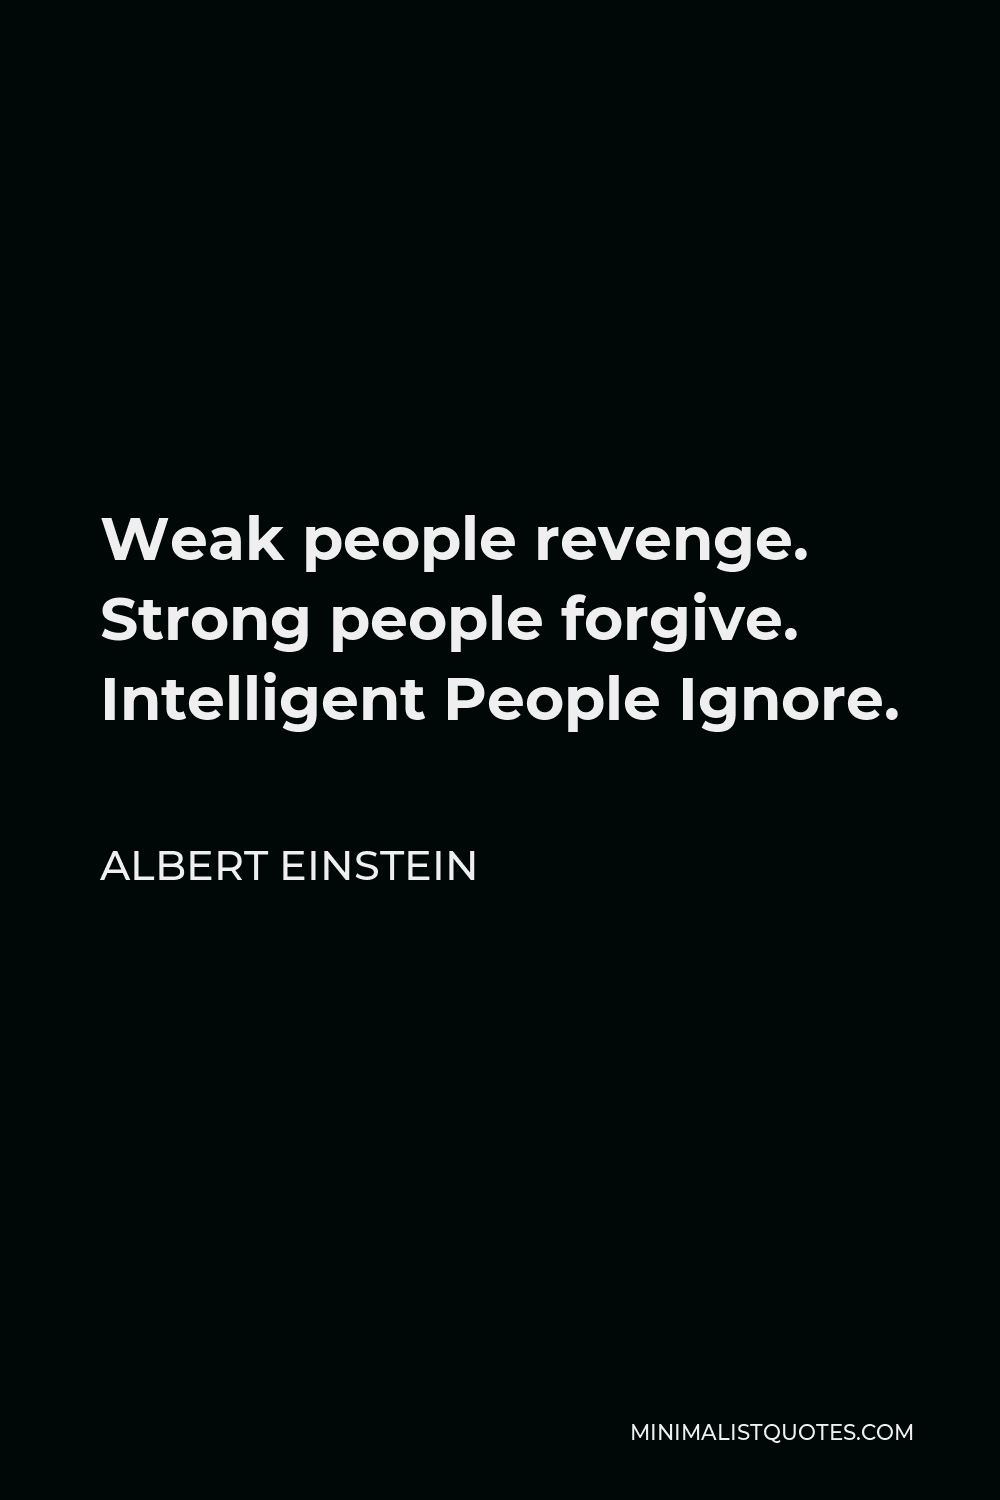 Albert Einstein Quote - Weak people revenge. Strong people forgive. Intelligent People Ignore.